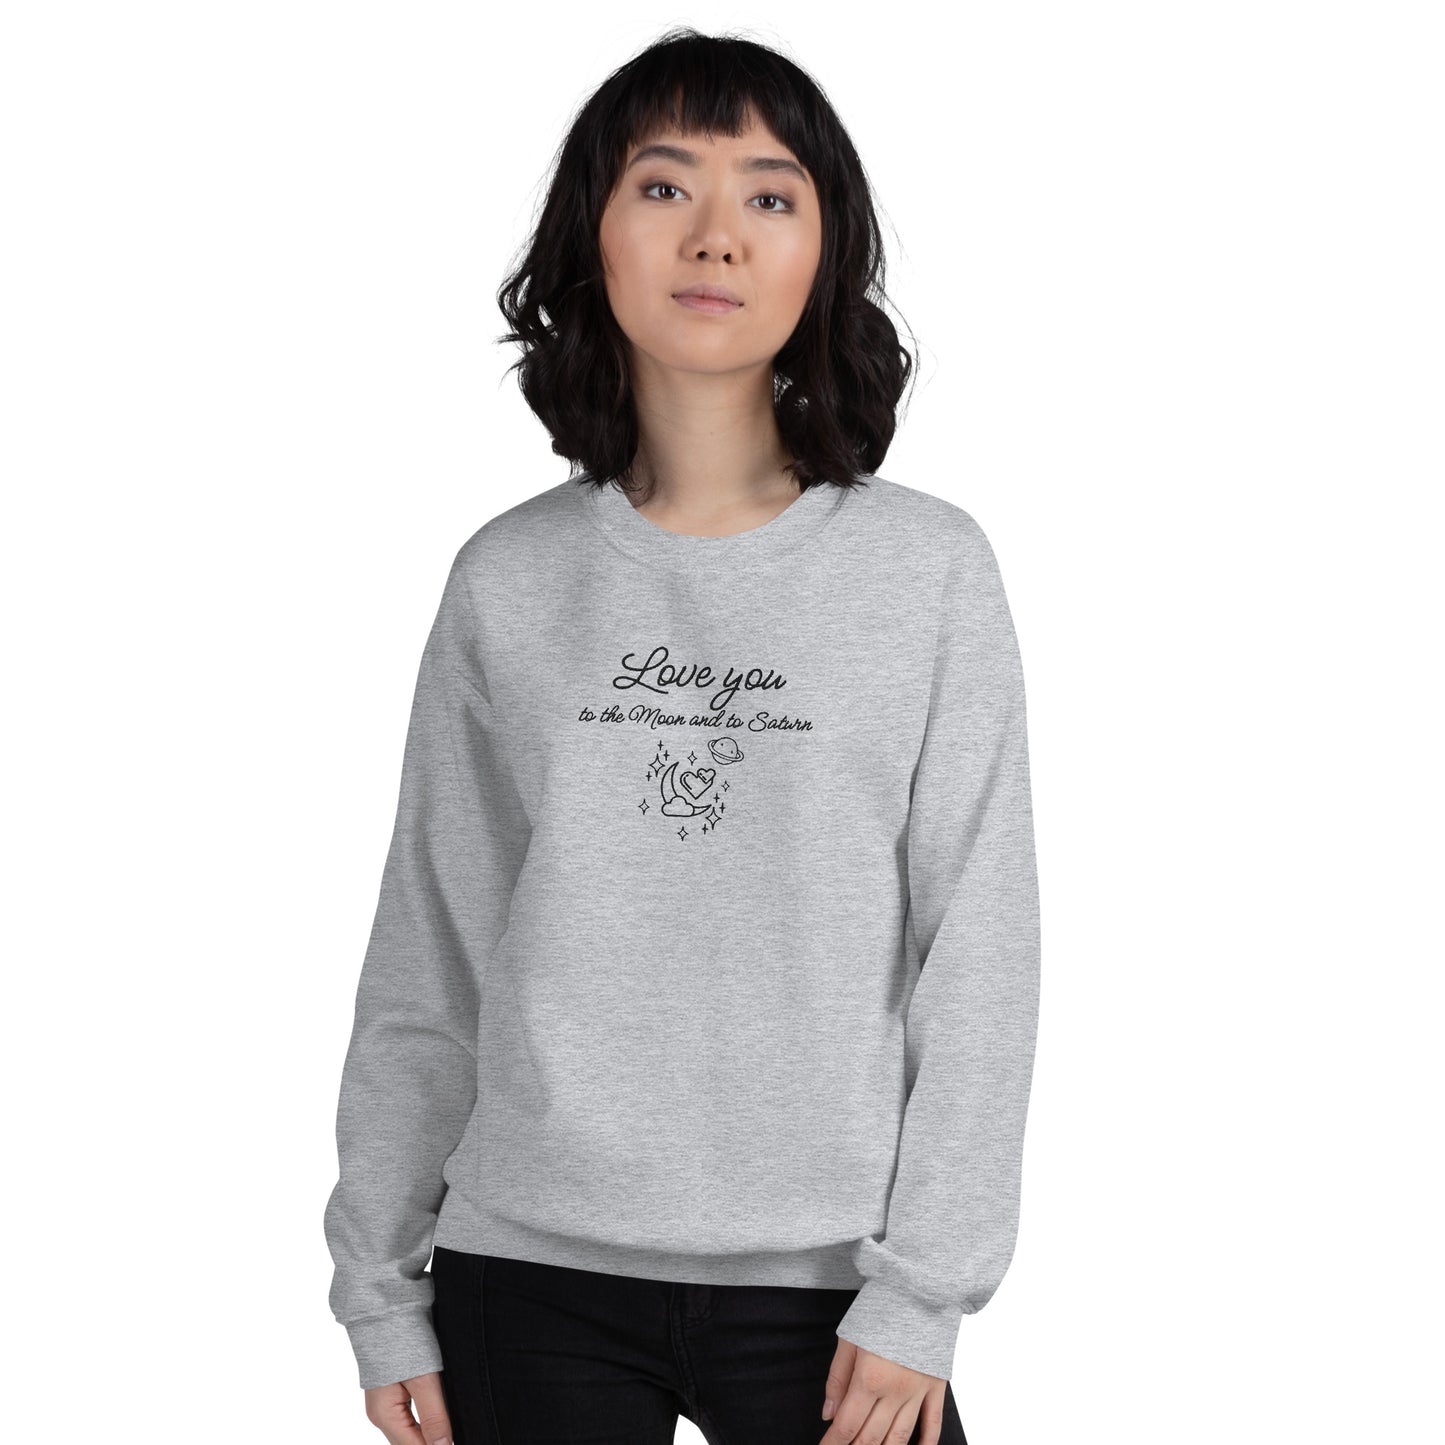 Moon and Saturn Embroidered Sweatshirt Sport Grey